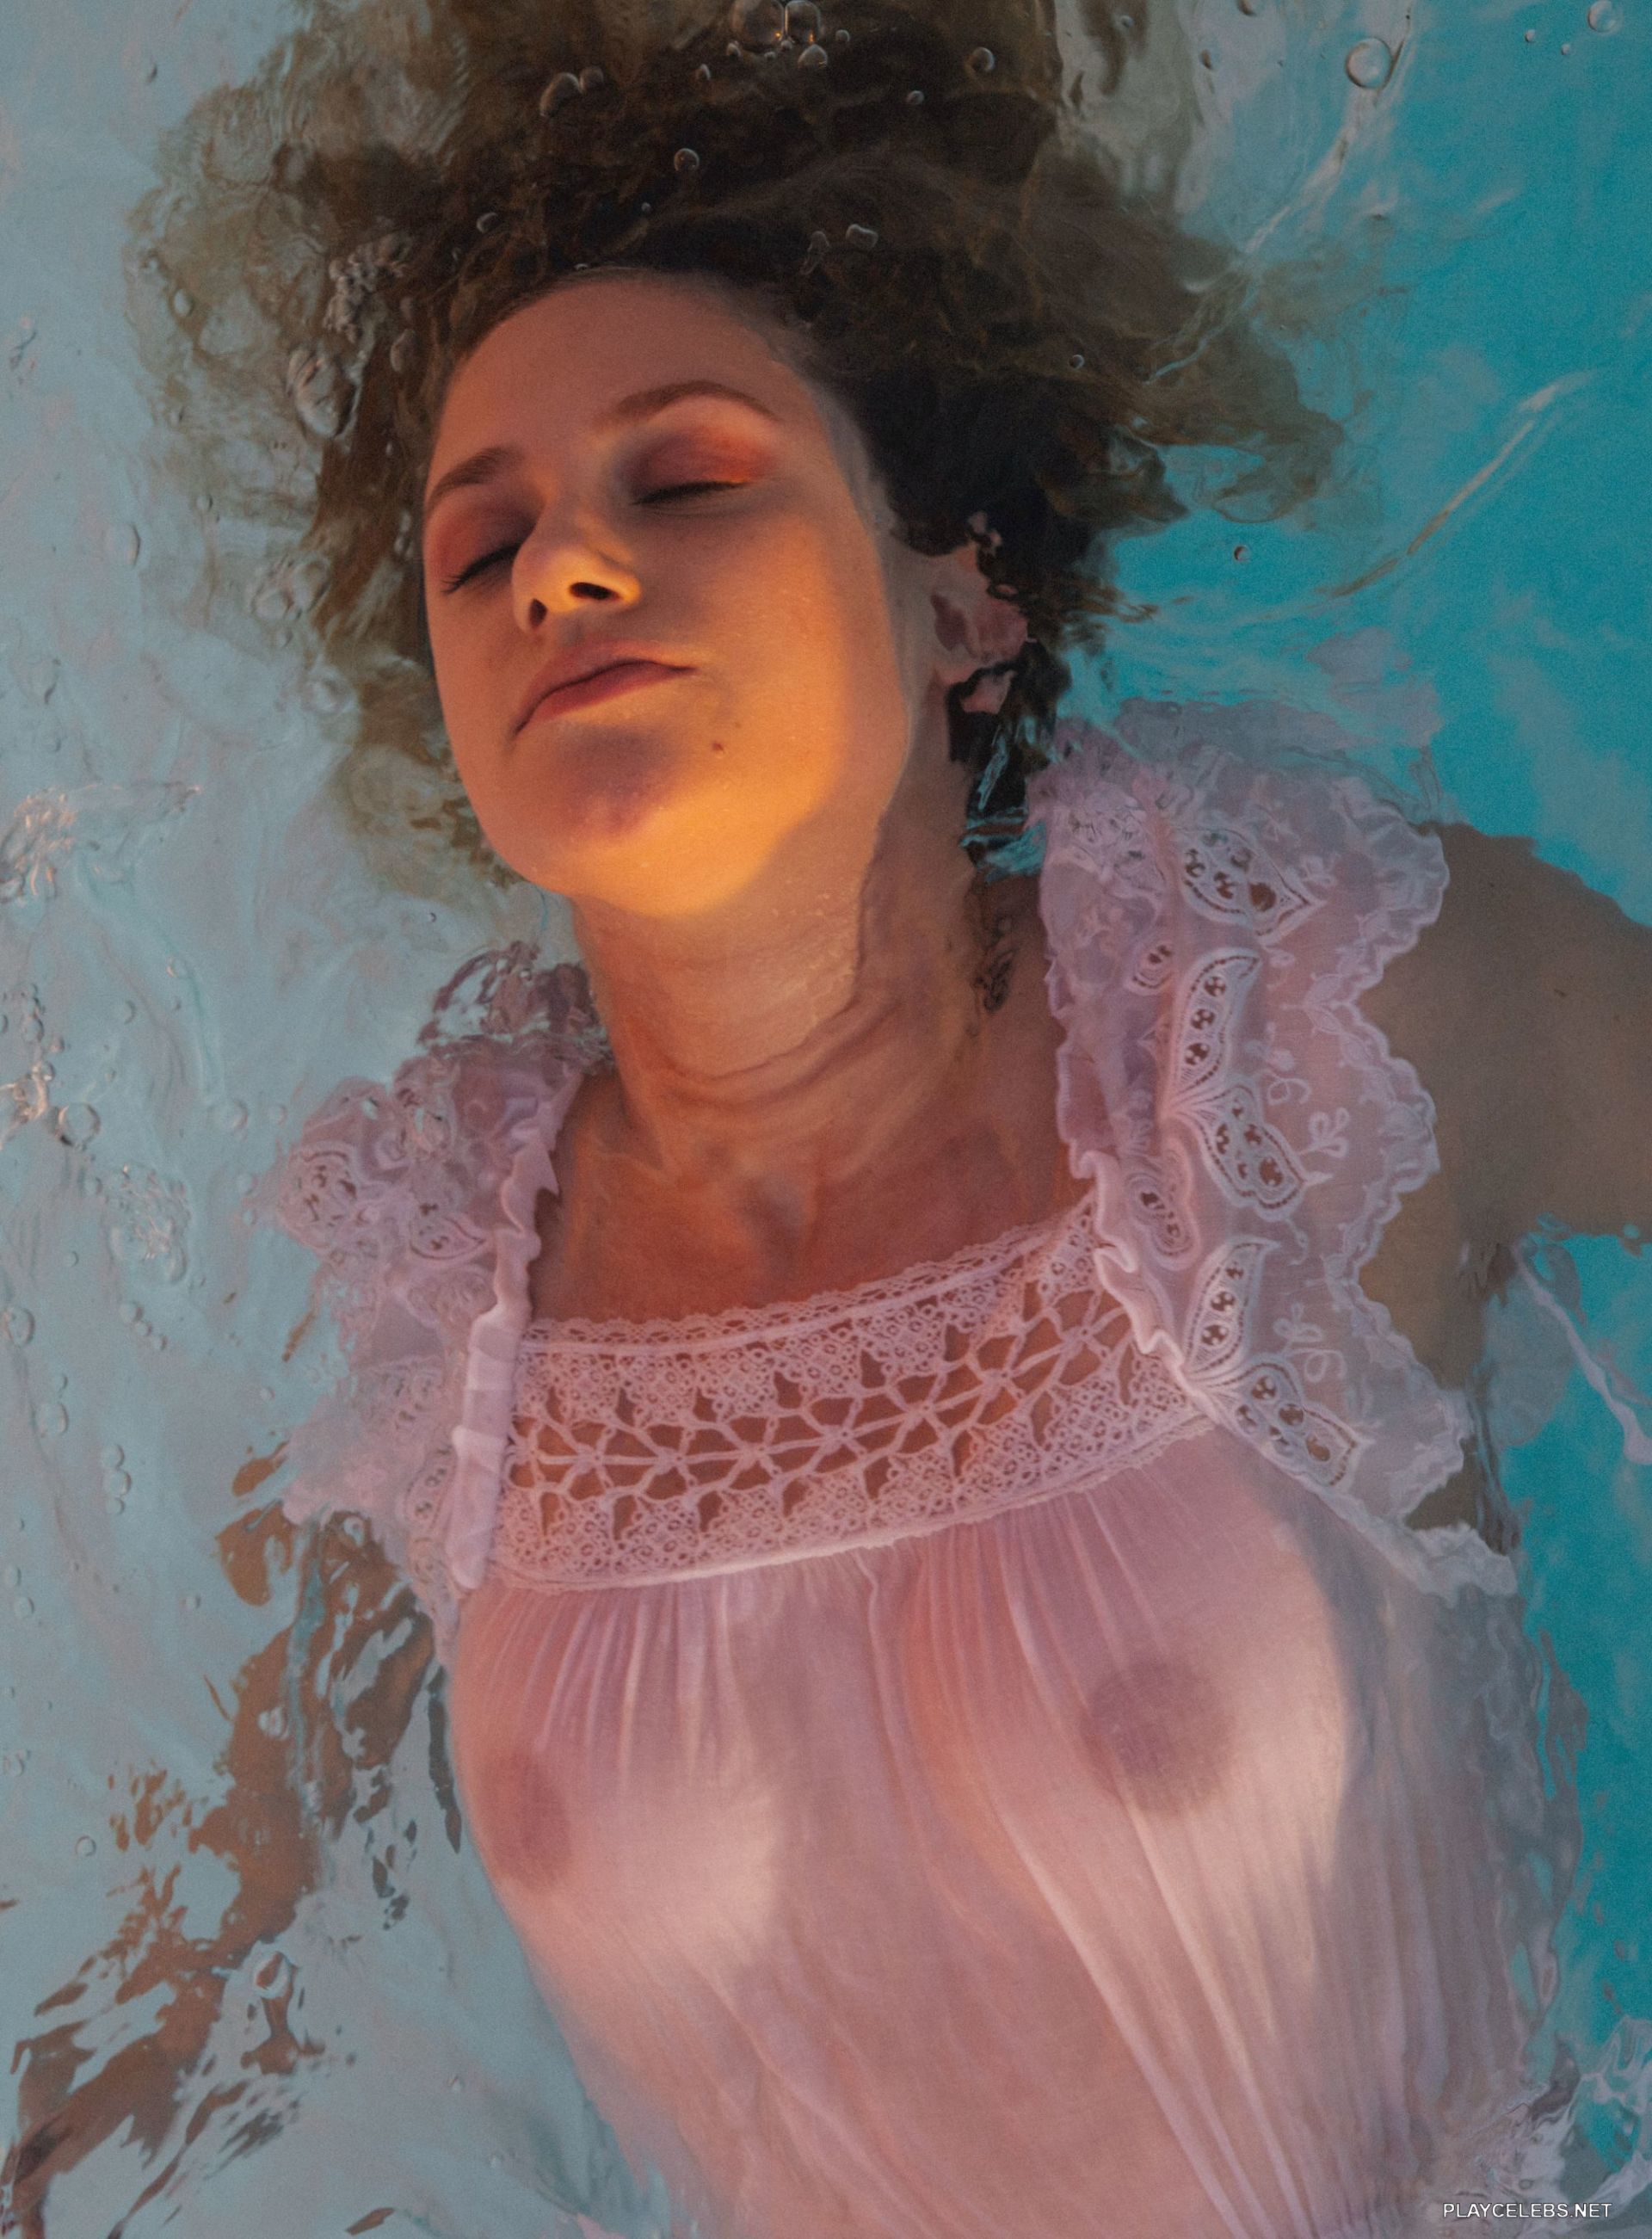 Lili Reinhart Topless And Hot See Through Photos Playcelebs Net